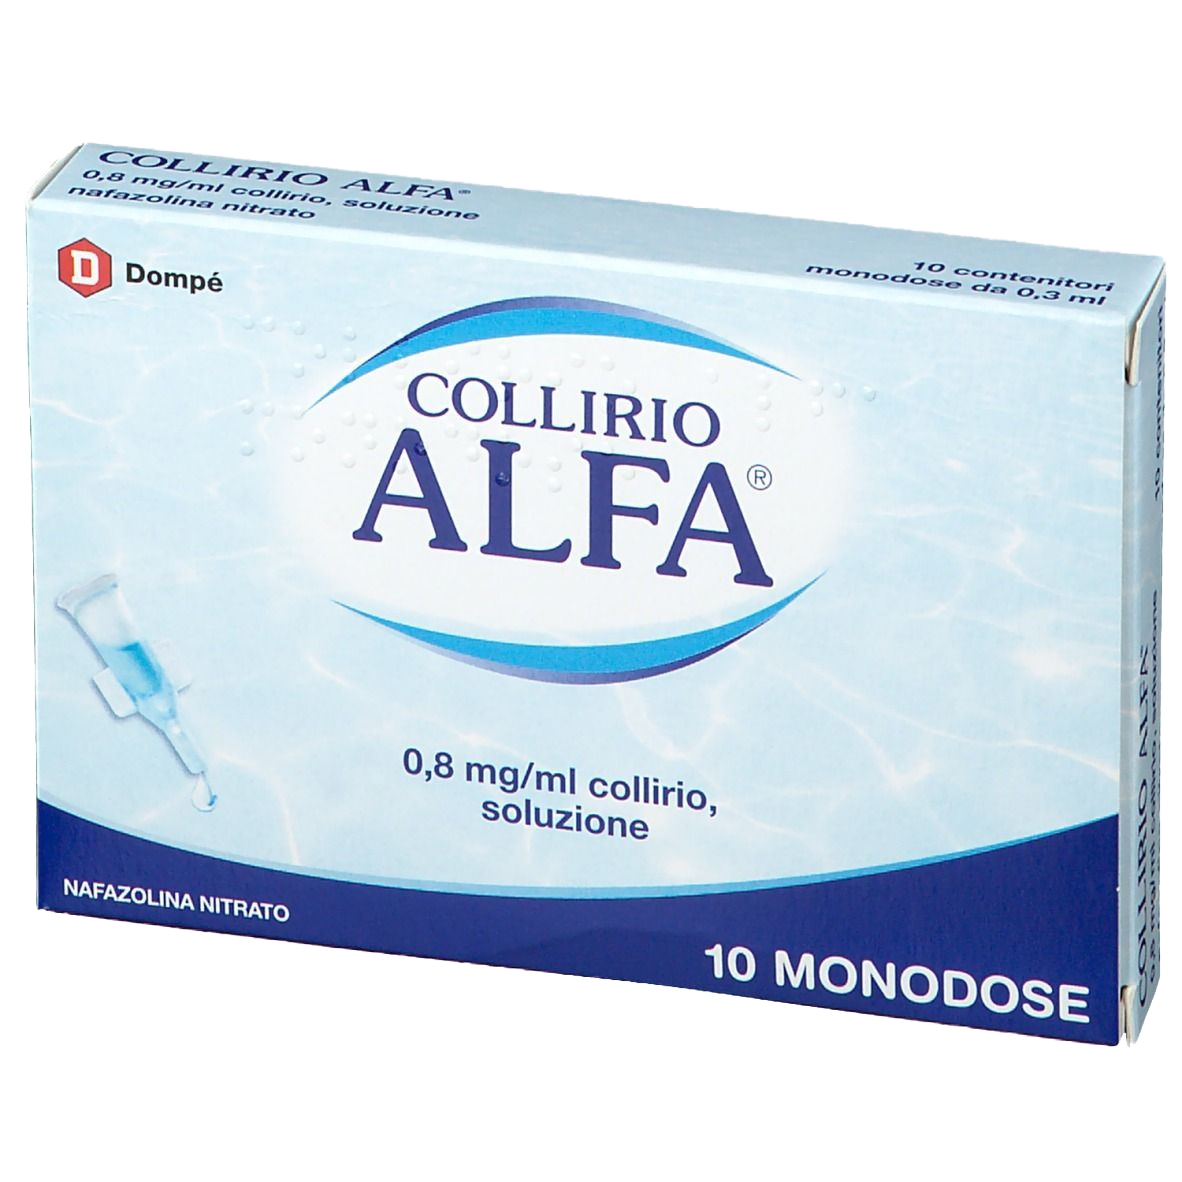 Collirio Alfa 10 contenitori monodose - Pharmabaik